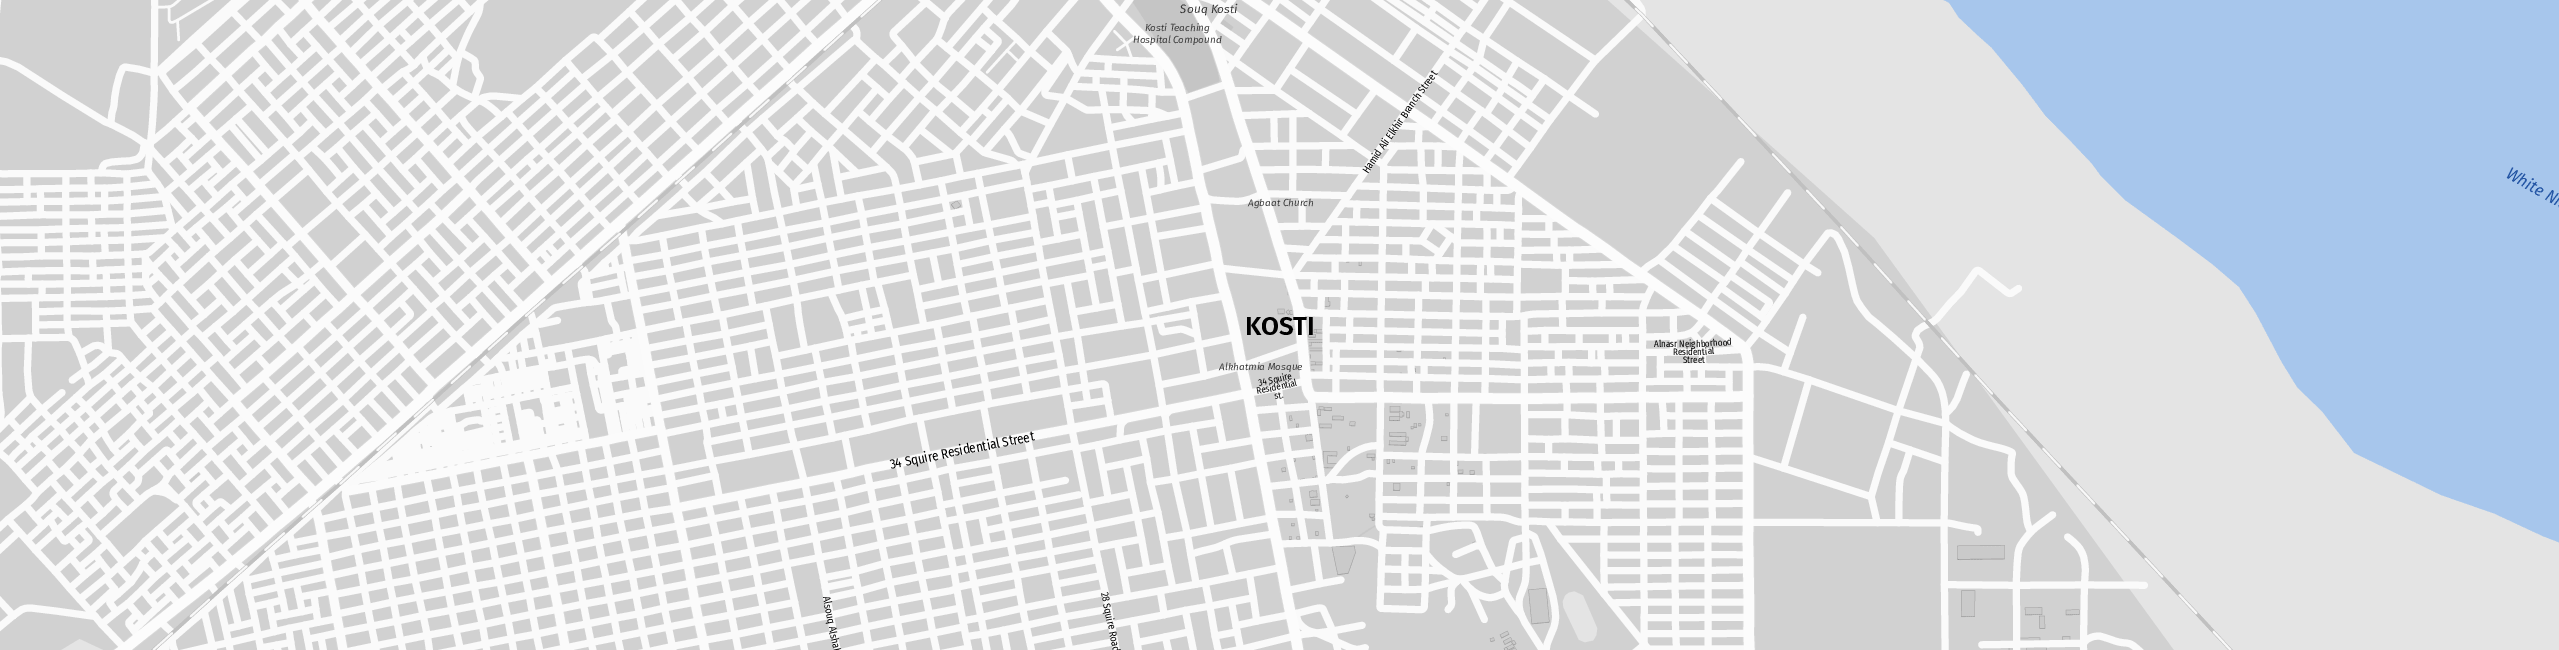 Stadtplan Kosti zum Downloaden.